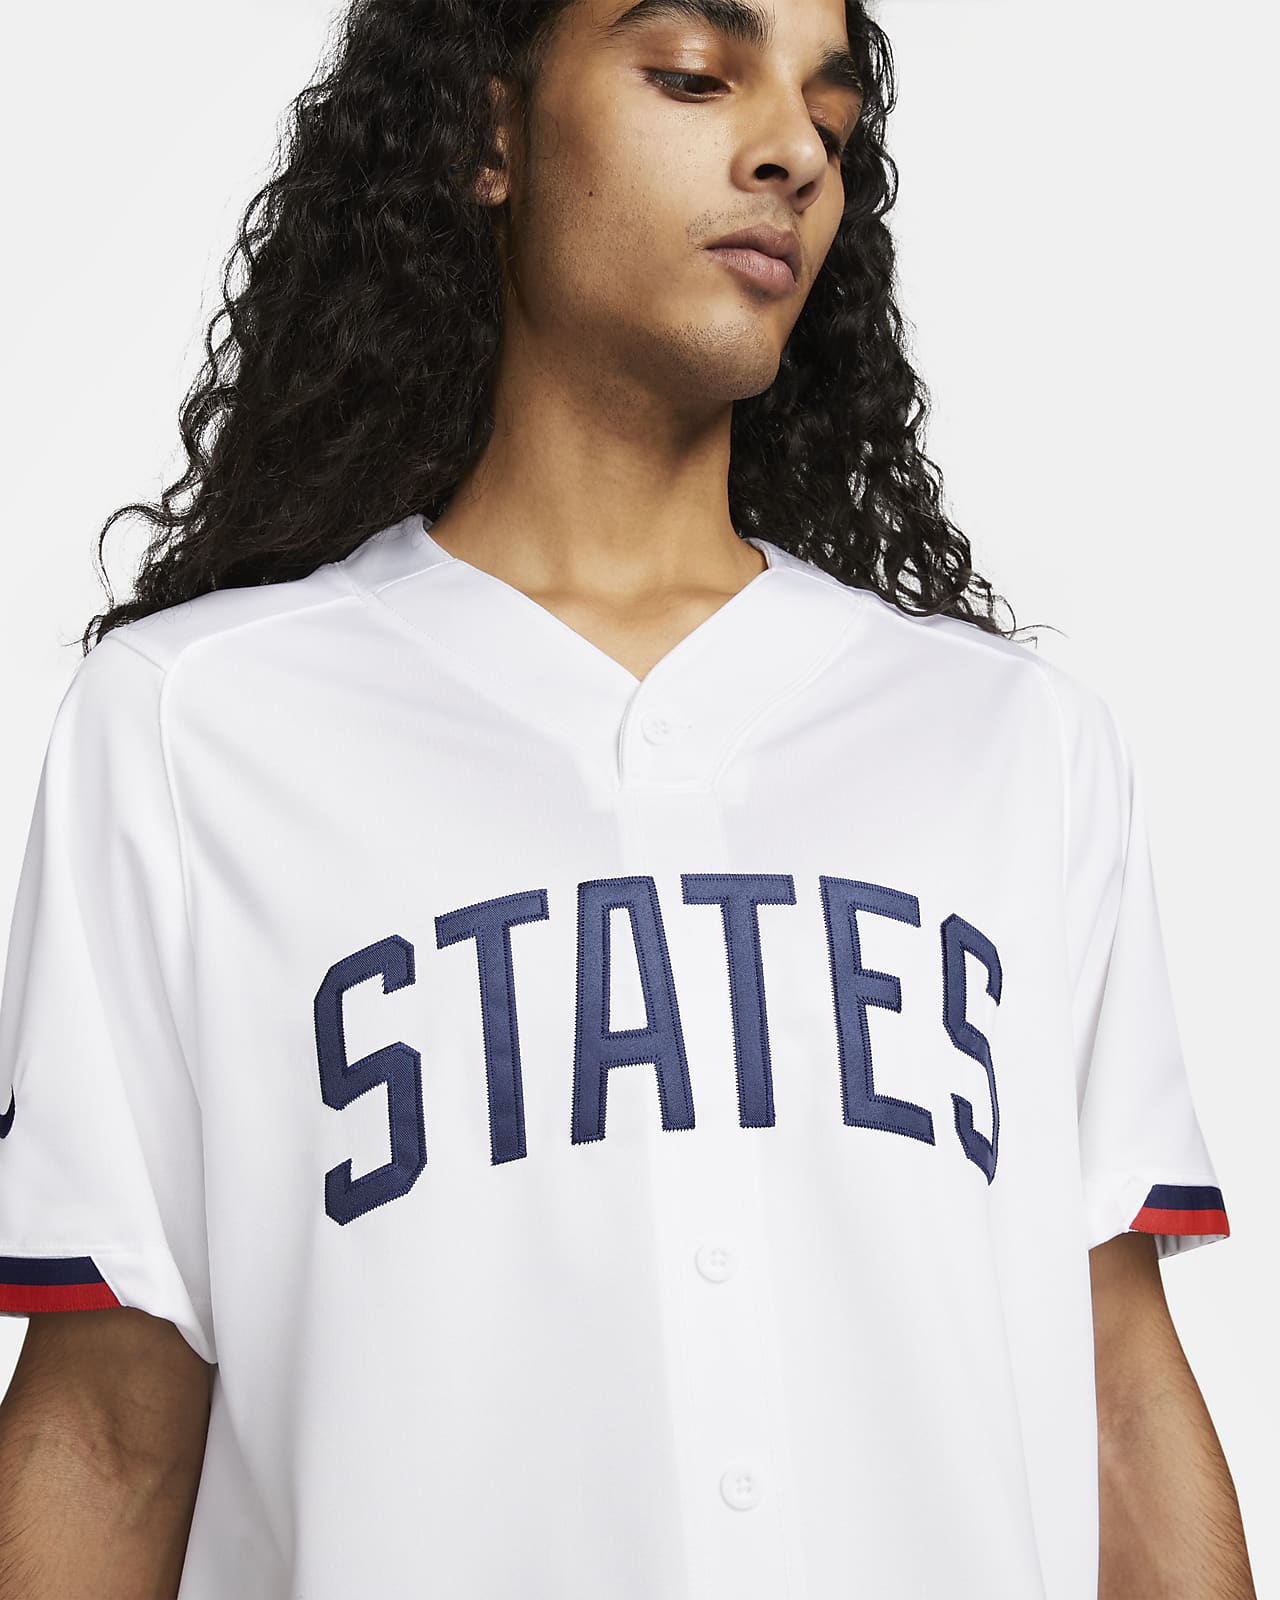 Baseball Uniforms - Custom Nike Uniforms, Nike Team